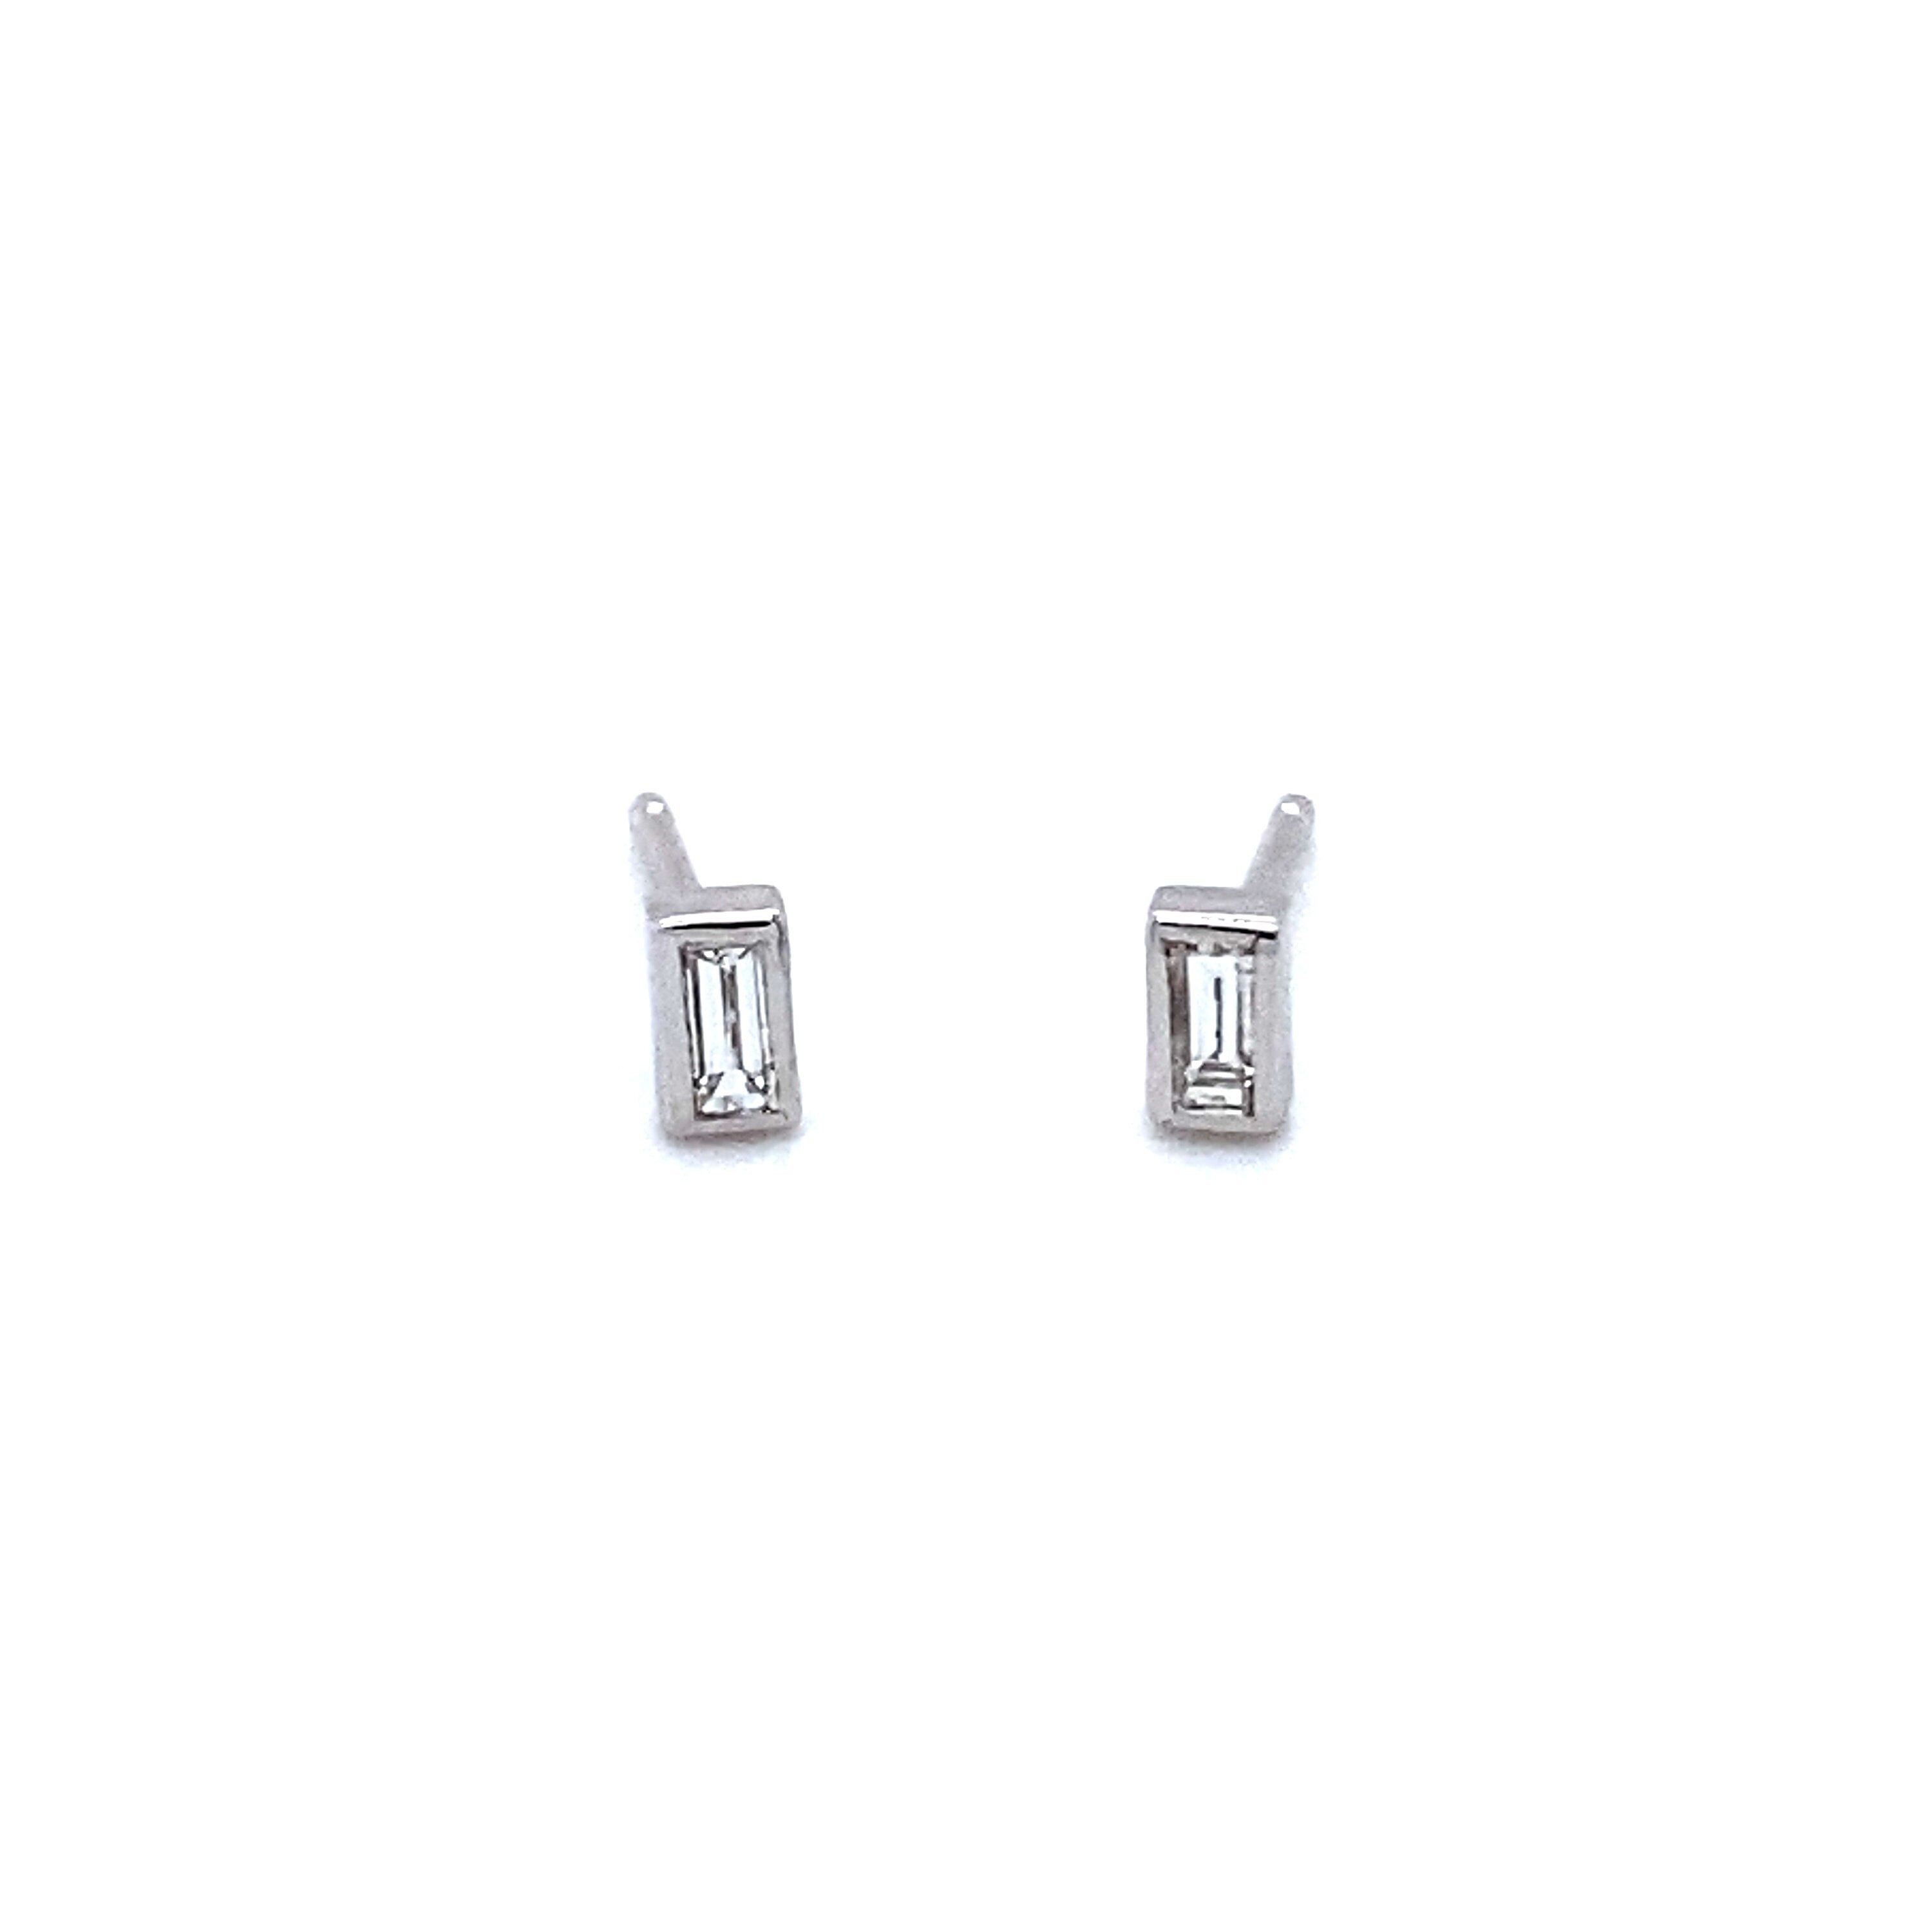 Baguette Cut Diamond Stud Earrings in Solid 14K White Gold, Bezel Set, Small, Natural Diamond.